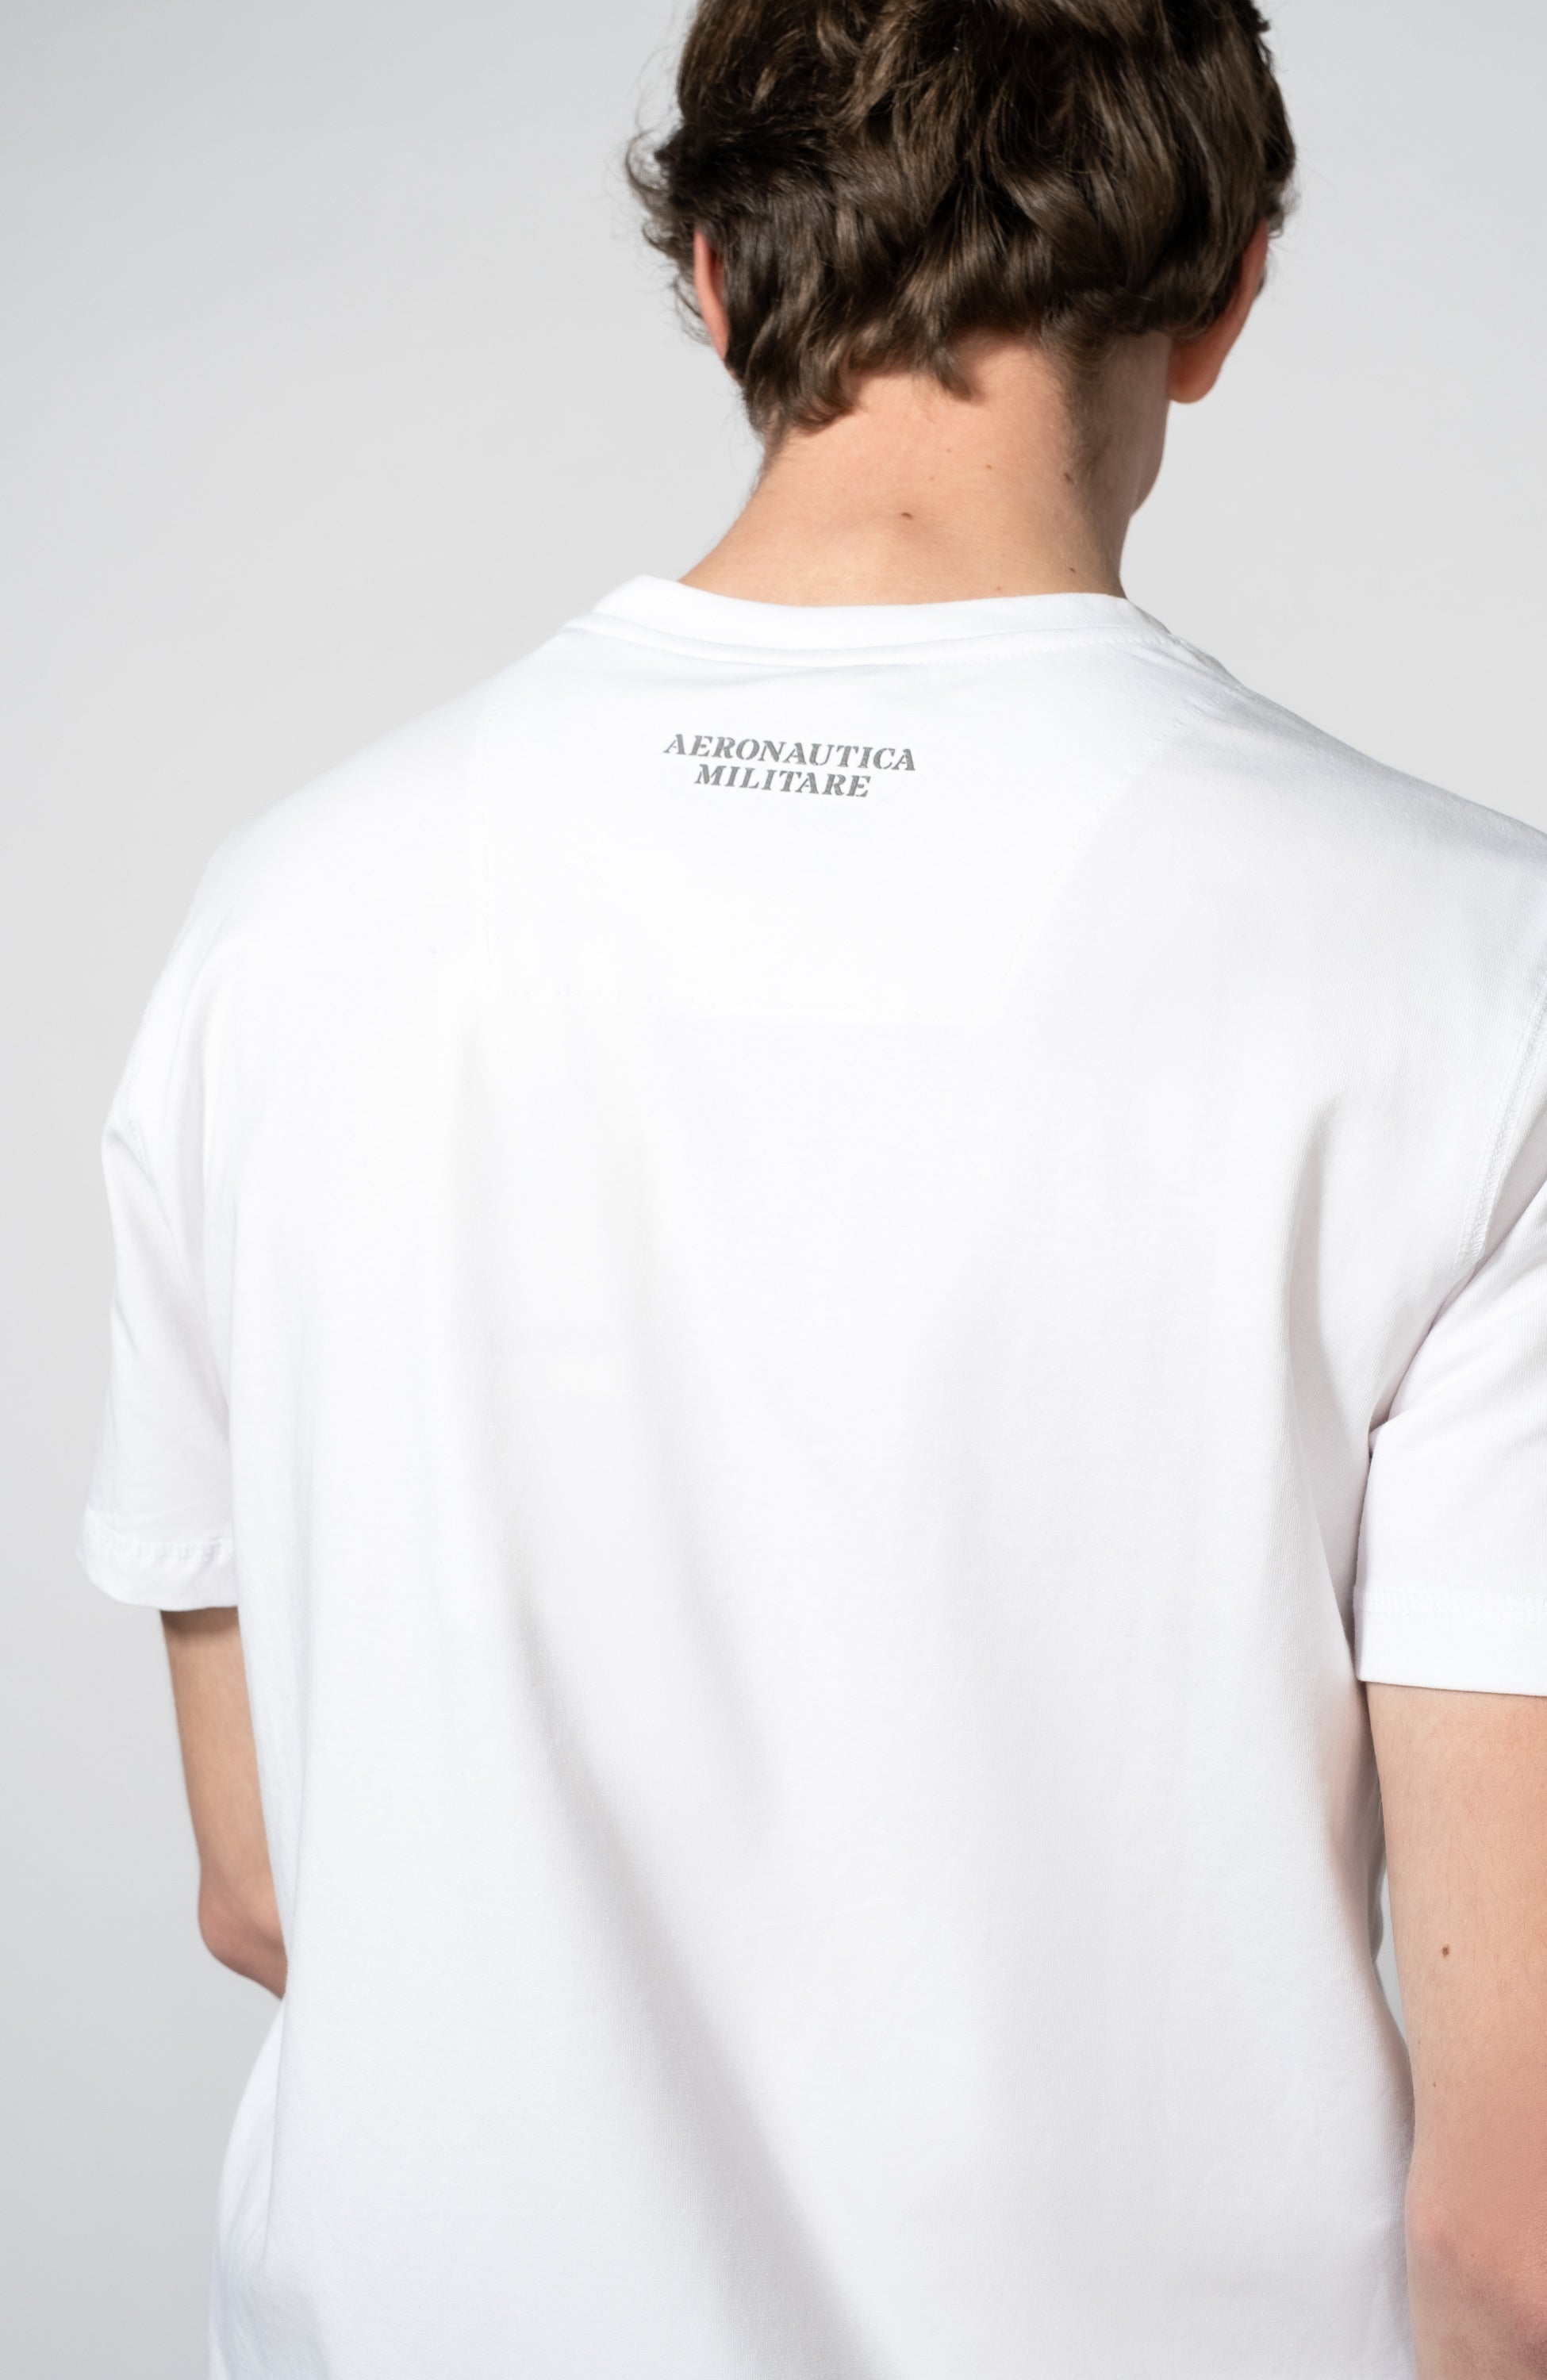 Airforse-print cotton t-shirt